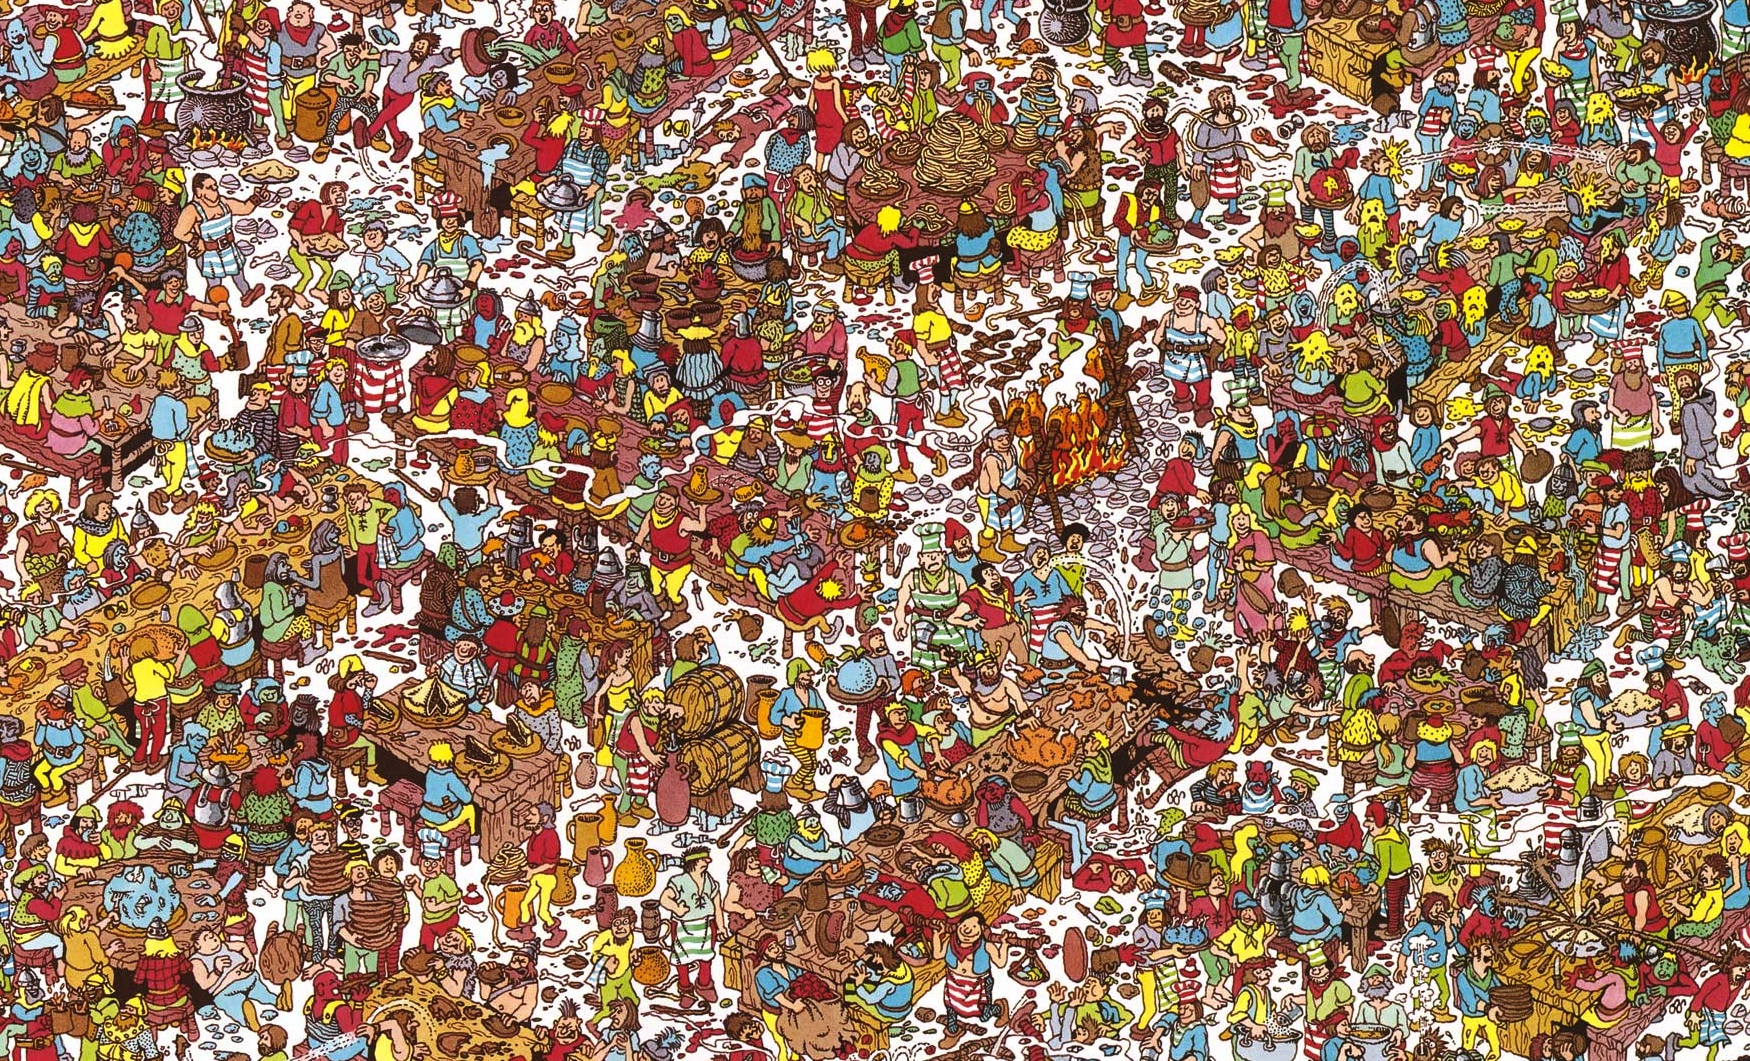 Where's Wally or is it Waldo?